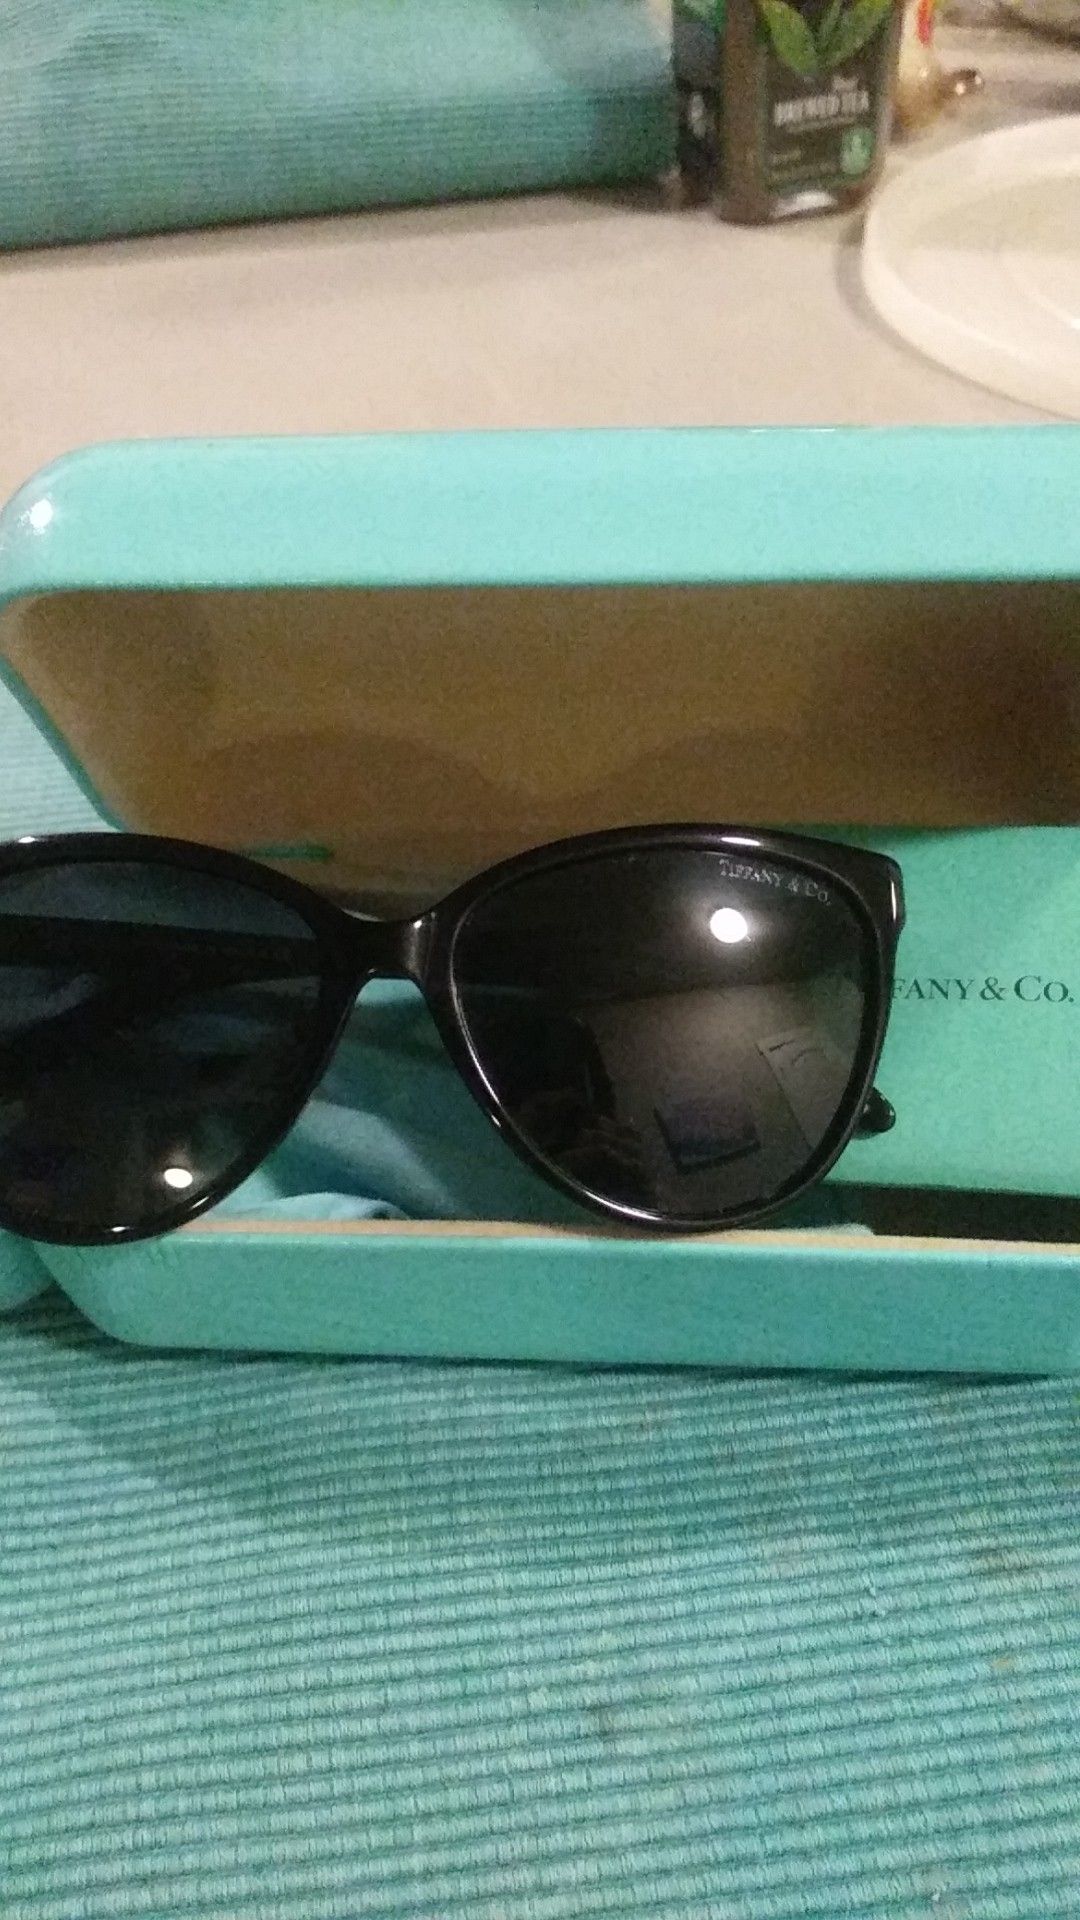 Tiffany &Co. Sunglasses with case.